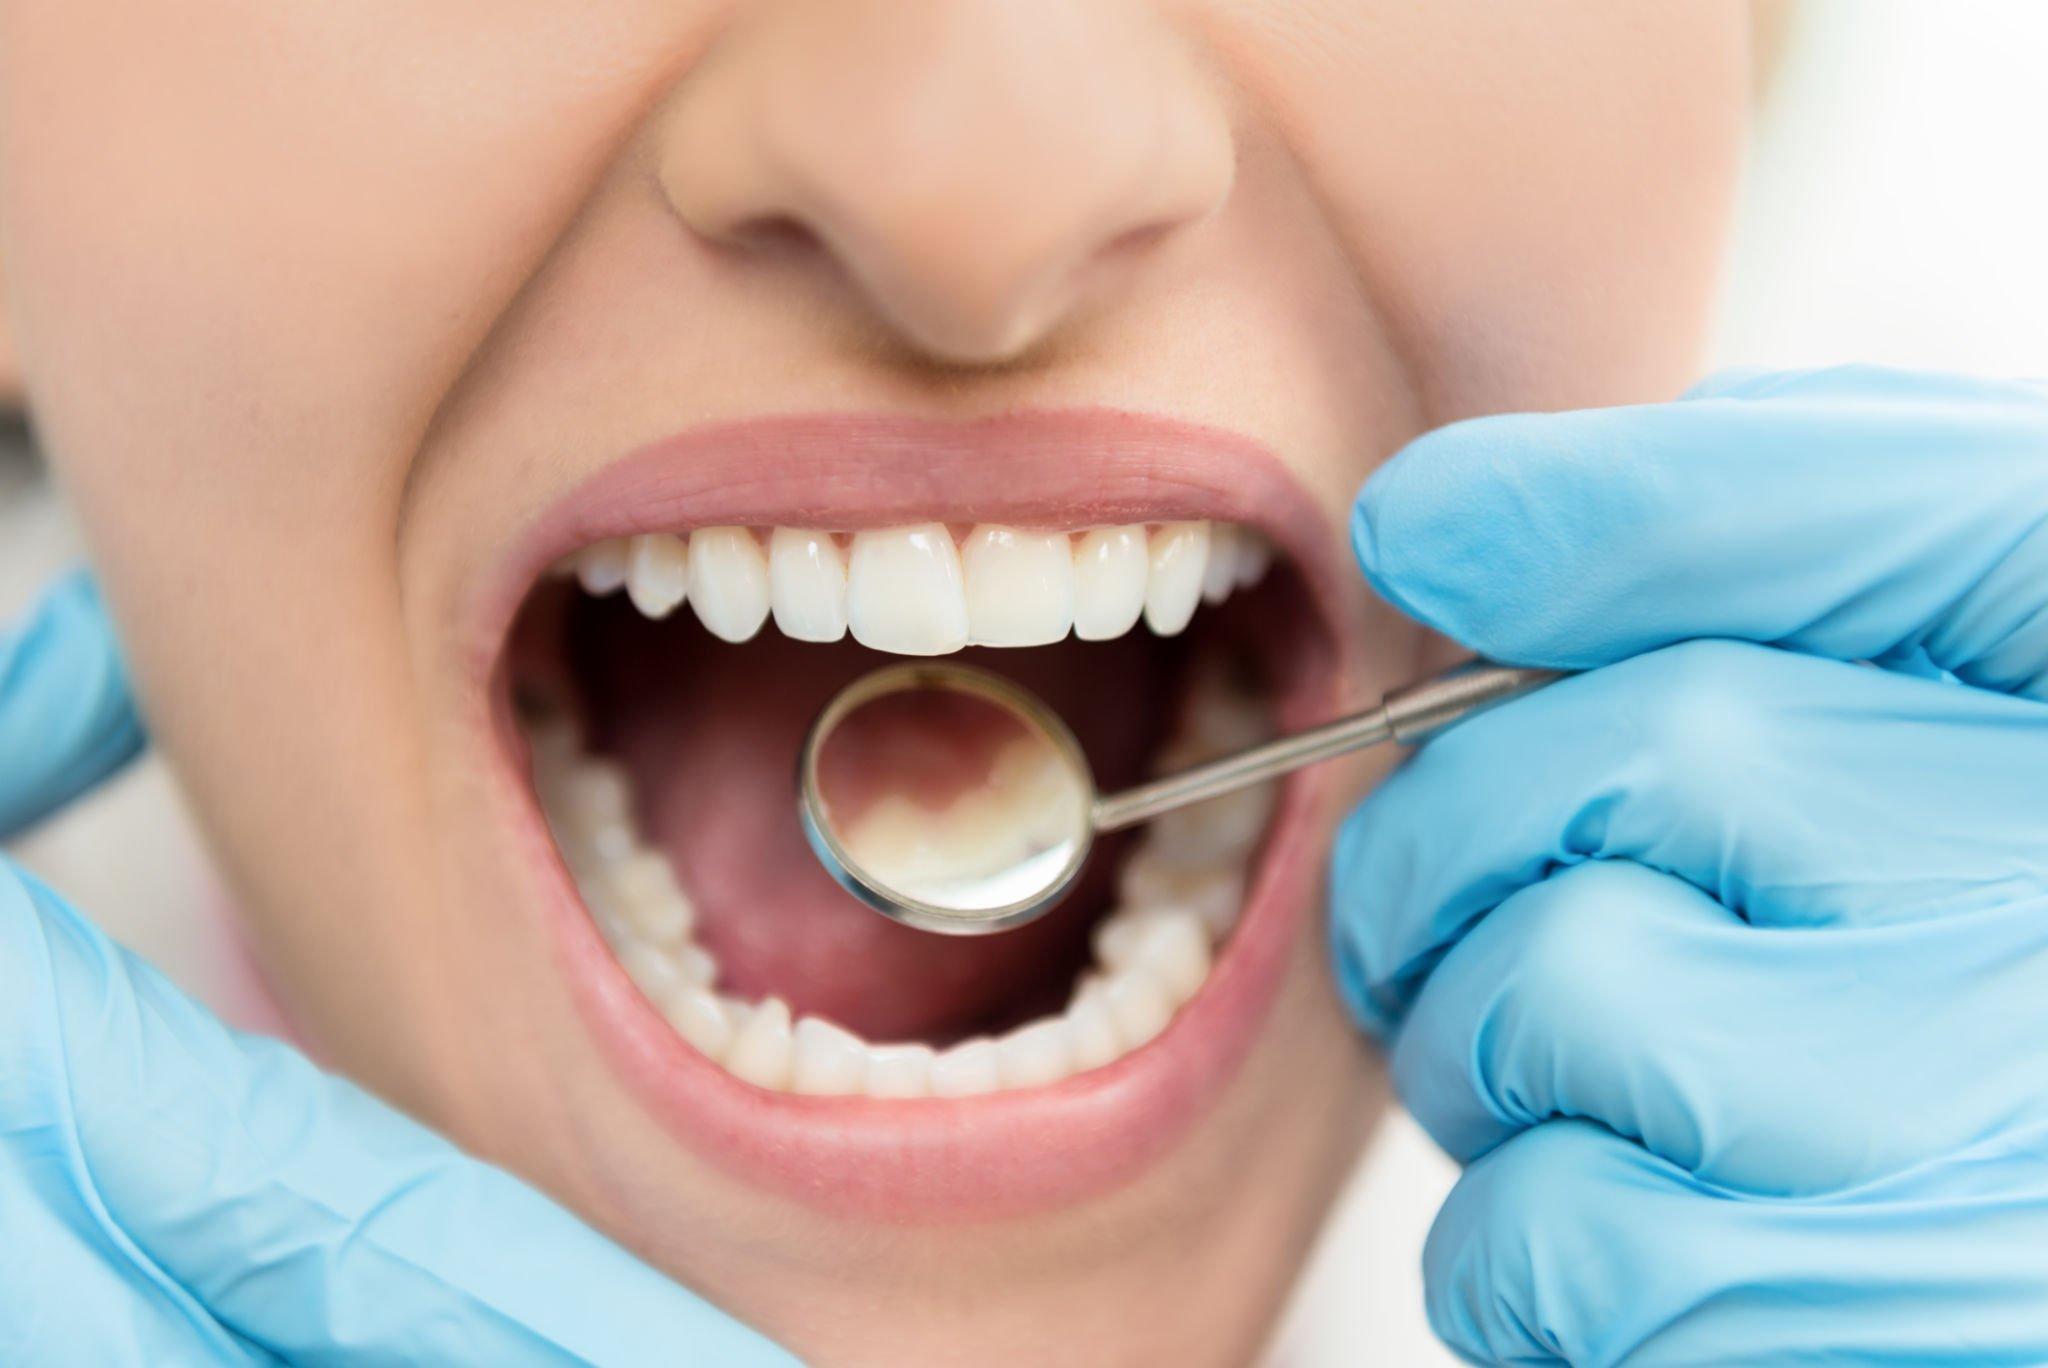 Symptoms of Tooth Enamel Erosions